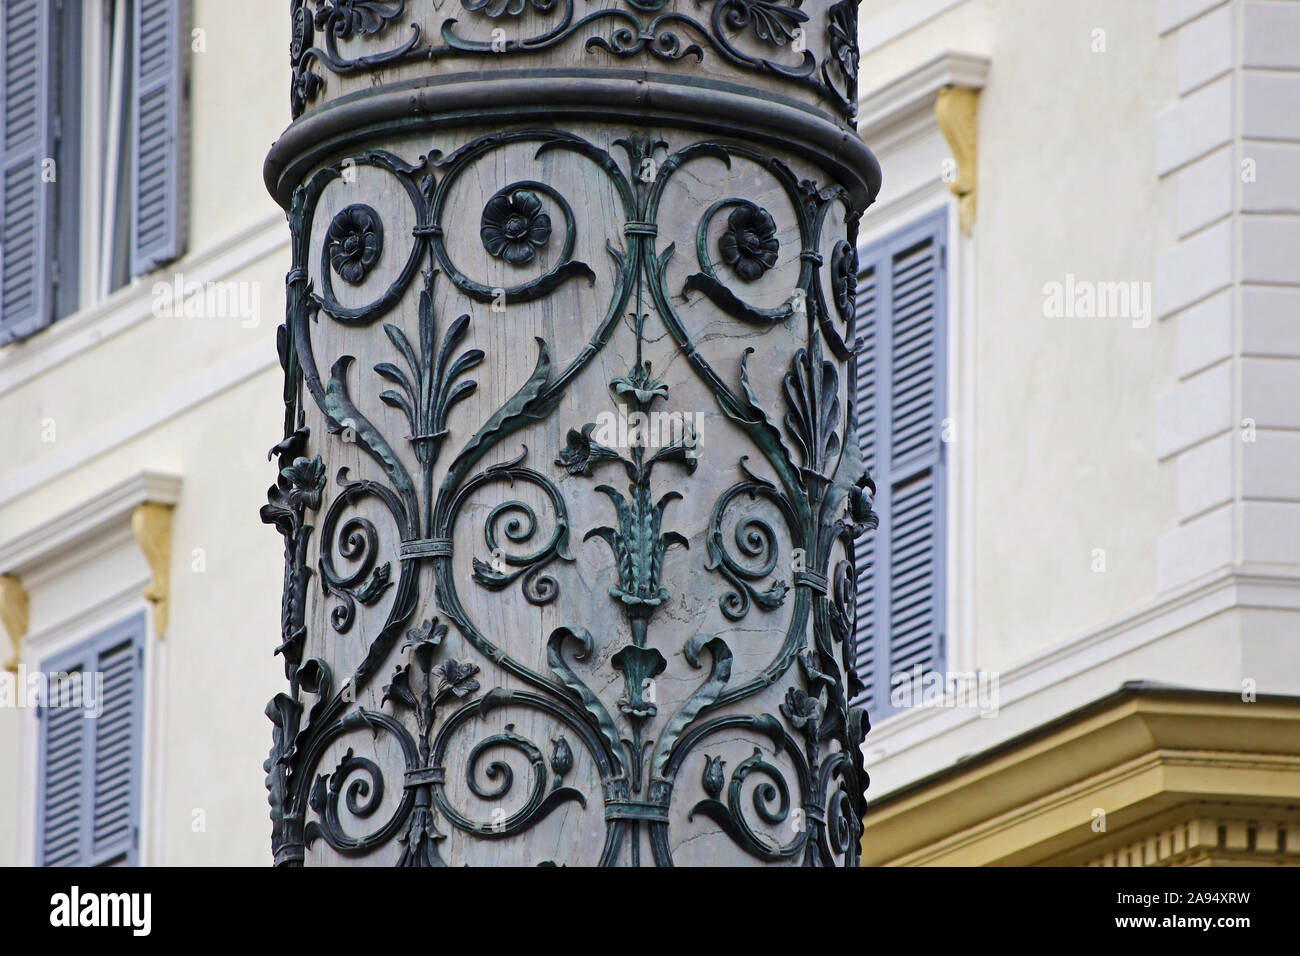 detail on a pillar or column near the Spanish Steps in Rome, Italy a famous landmark Stock Photo